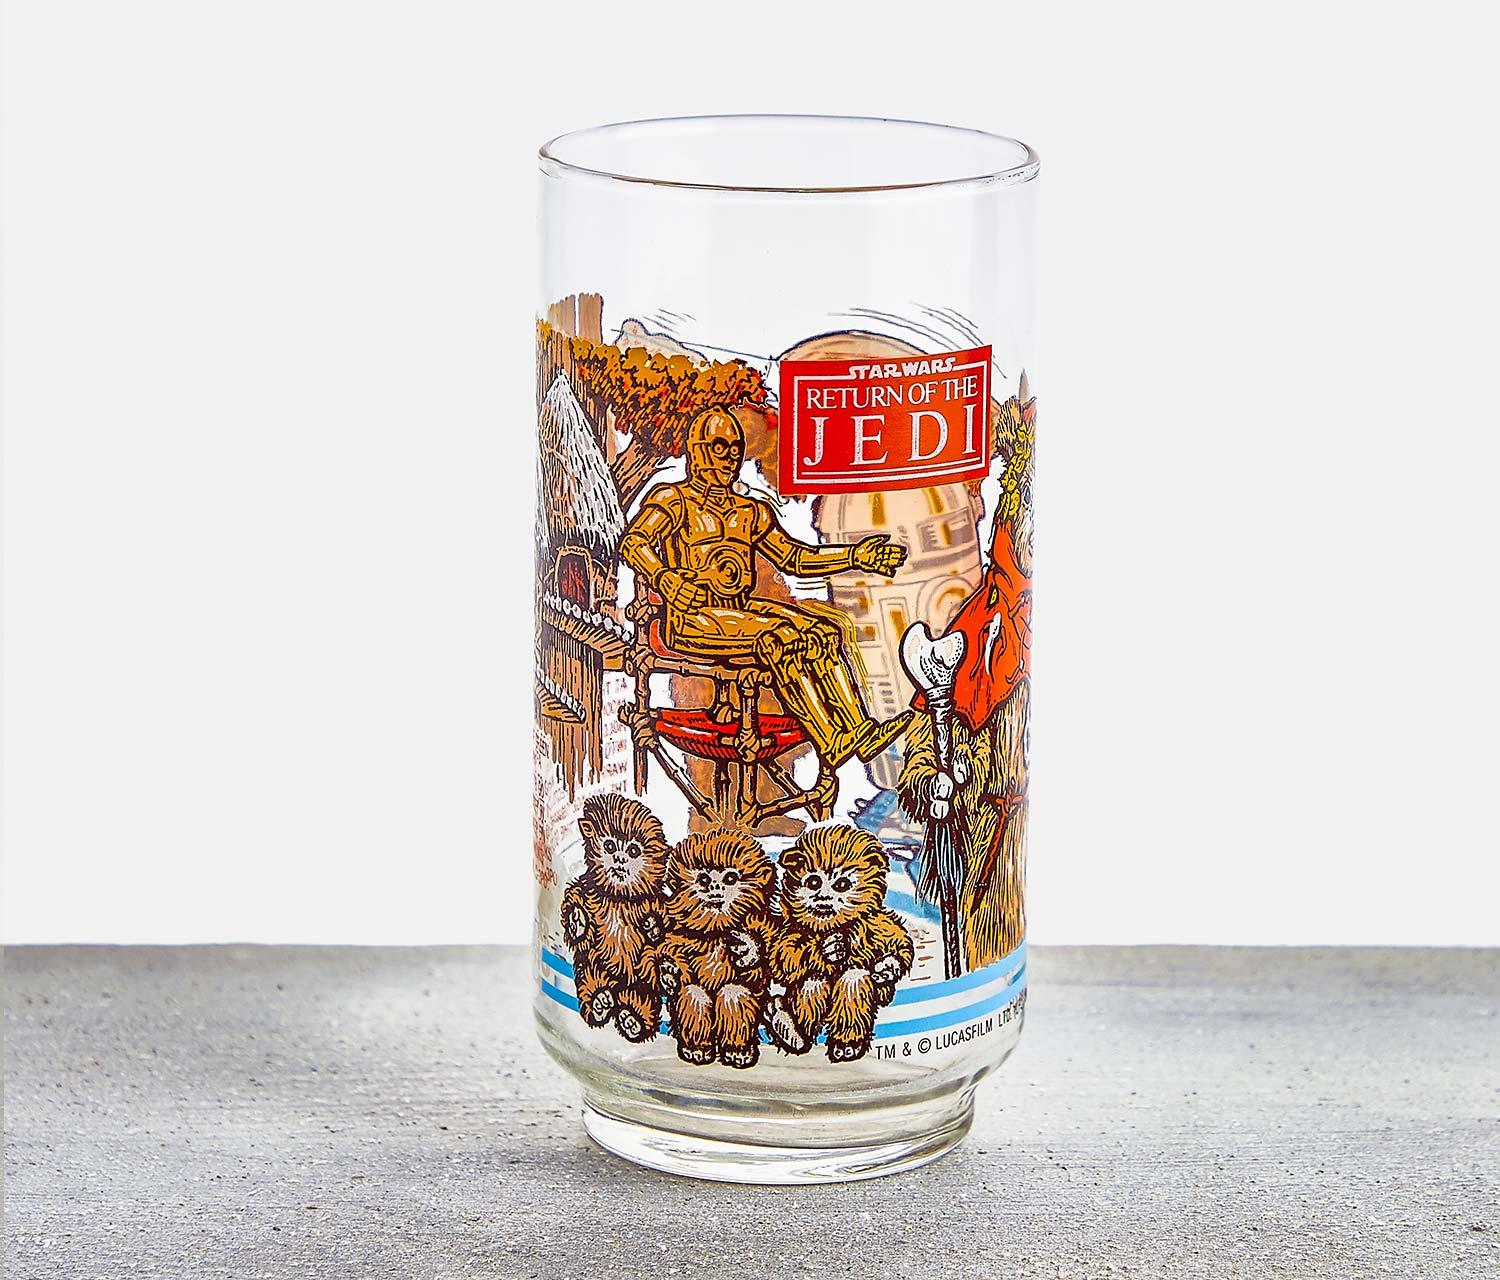 Star Wars: The Last Jedi The First Order Pint Glass